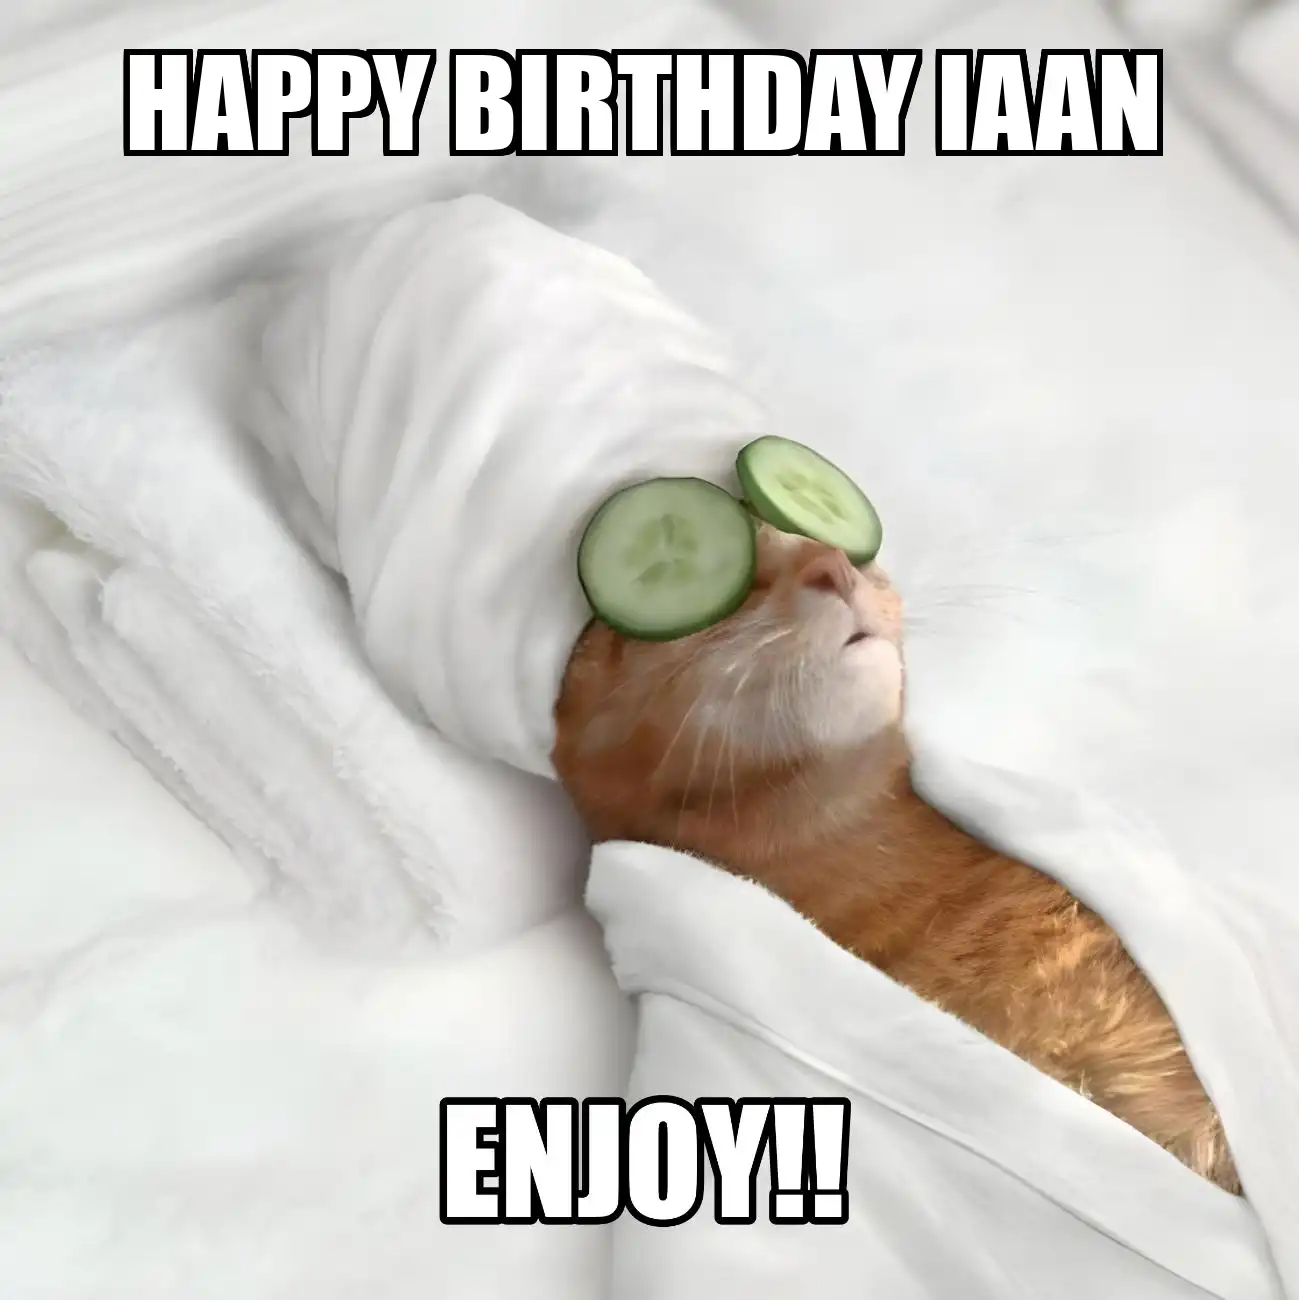 Happy Birthday Iaan Enjoy Cat Meme